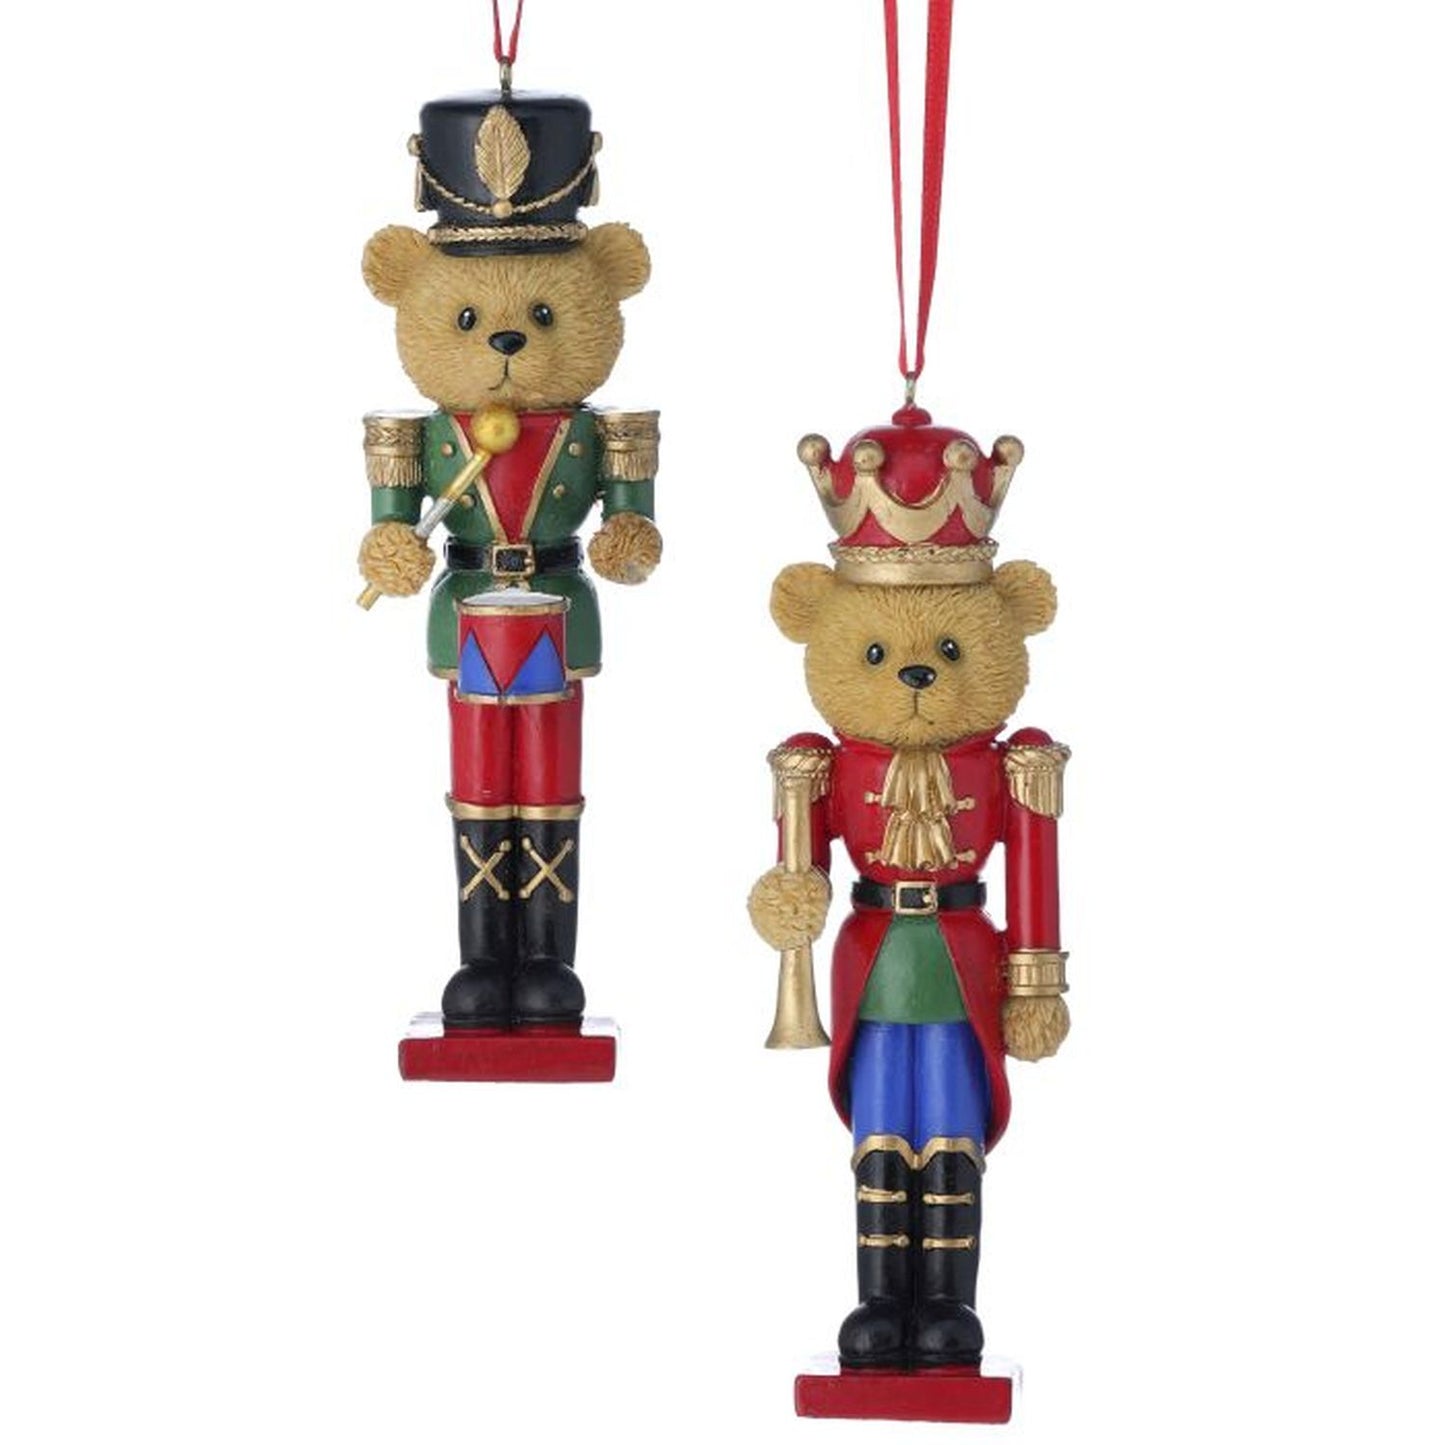 Regency International 6"Resin Toy Bear Nutcracker Ornament, Set of 2, Assortment